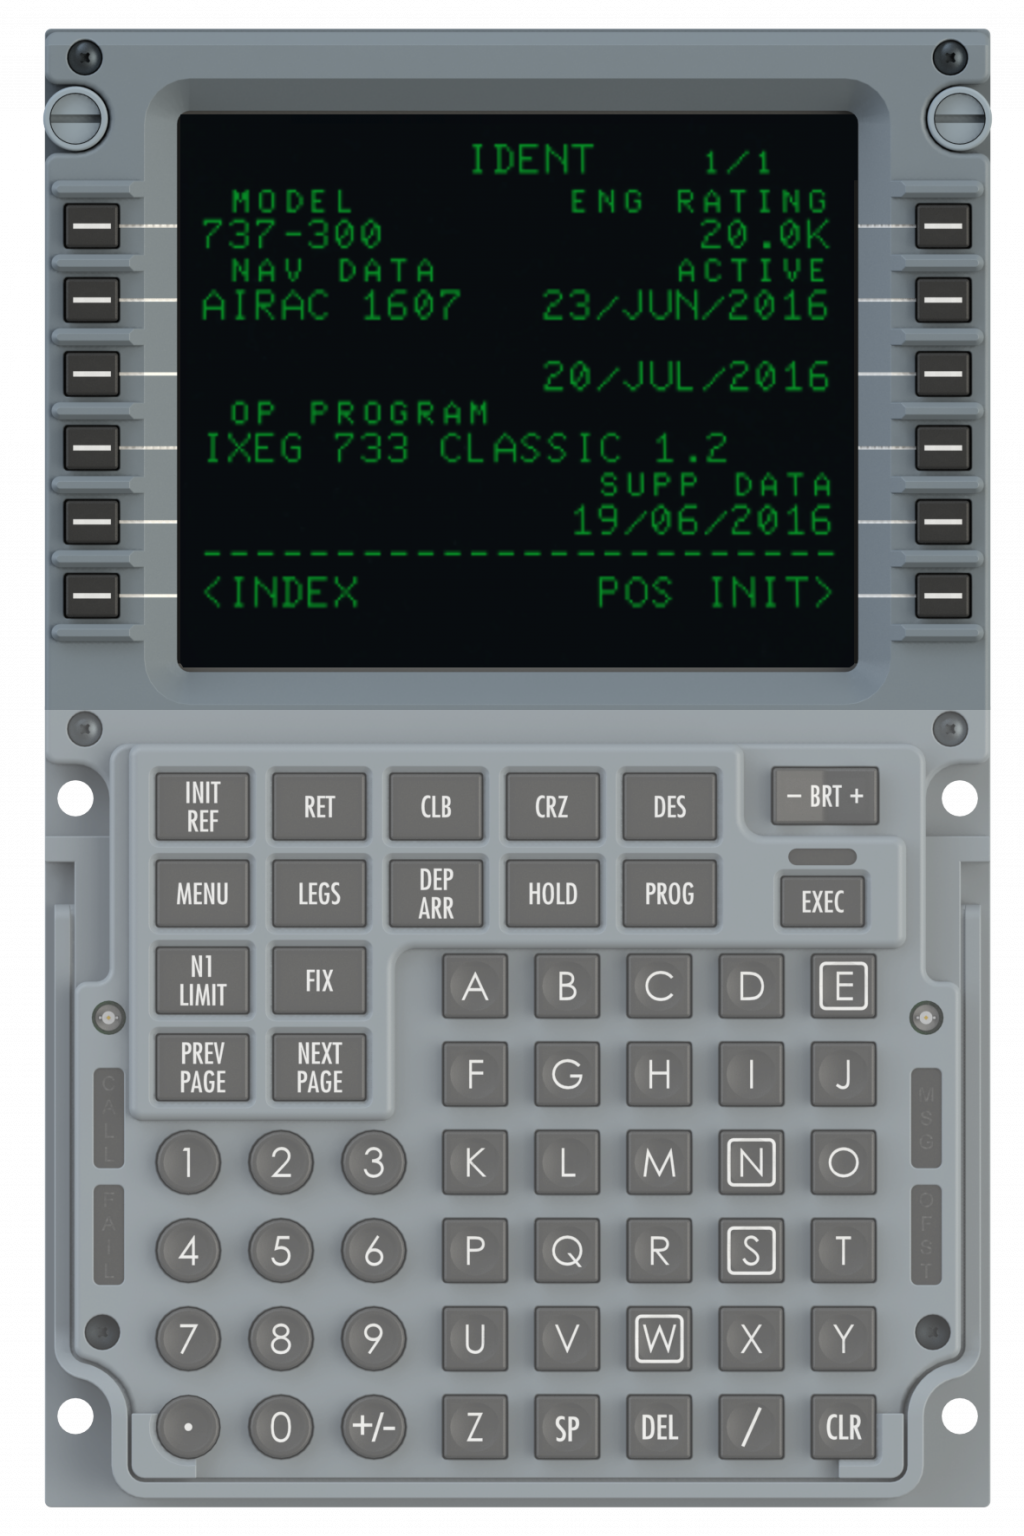 flight simulator home cockpit kit